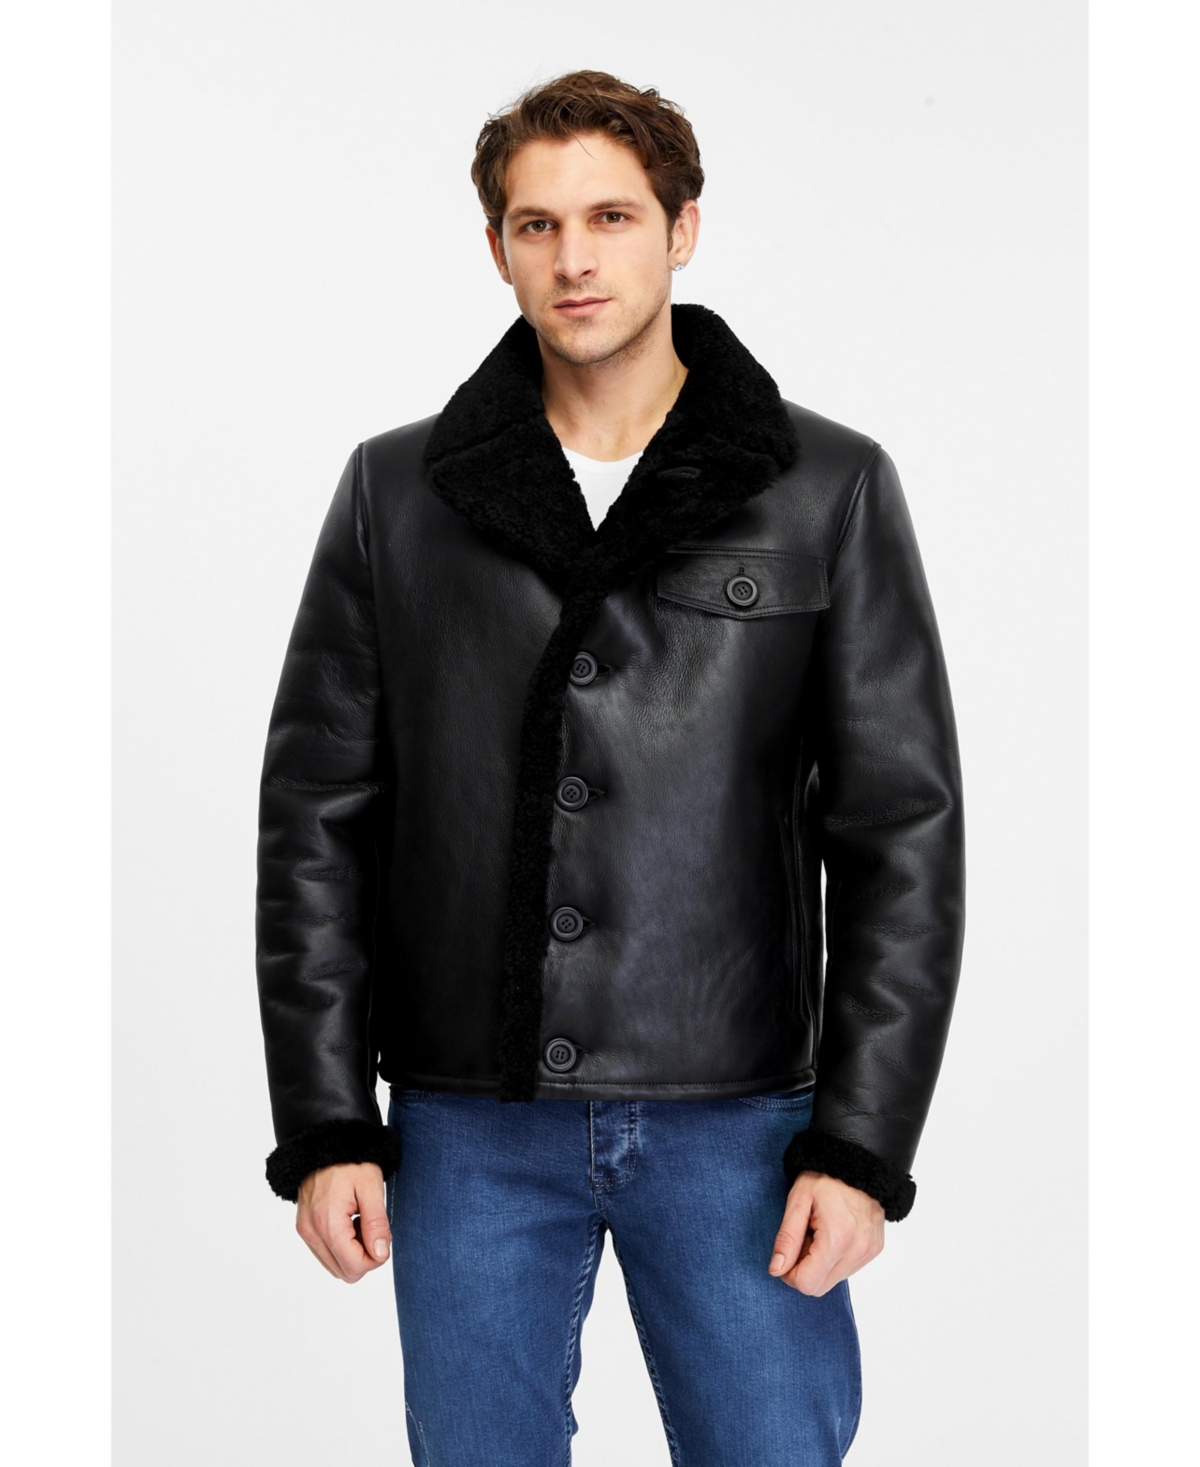 Men's Fashion Leather Jacket Wool, Black - Black